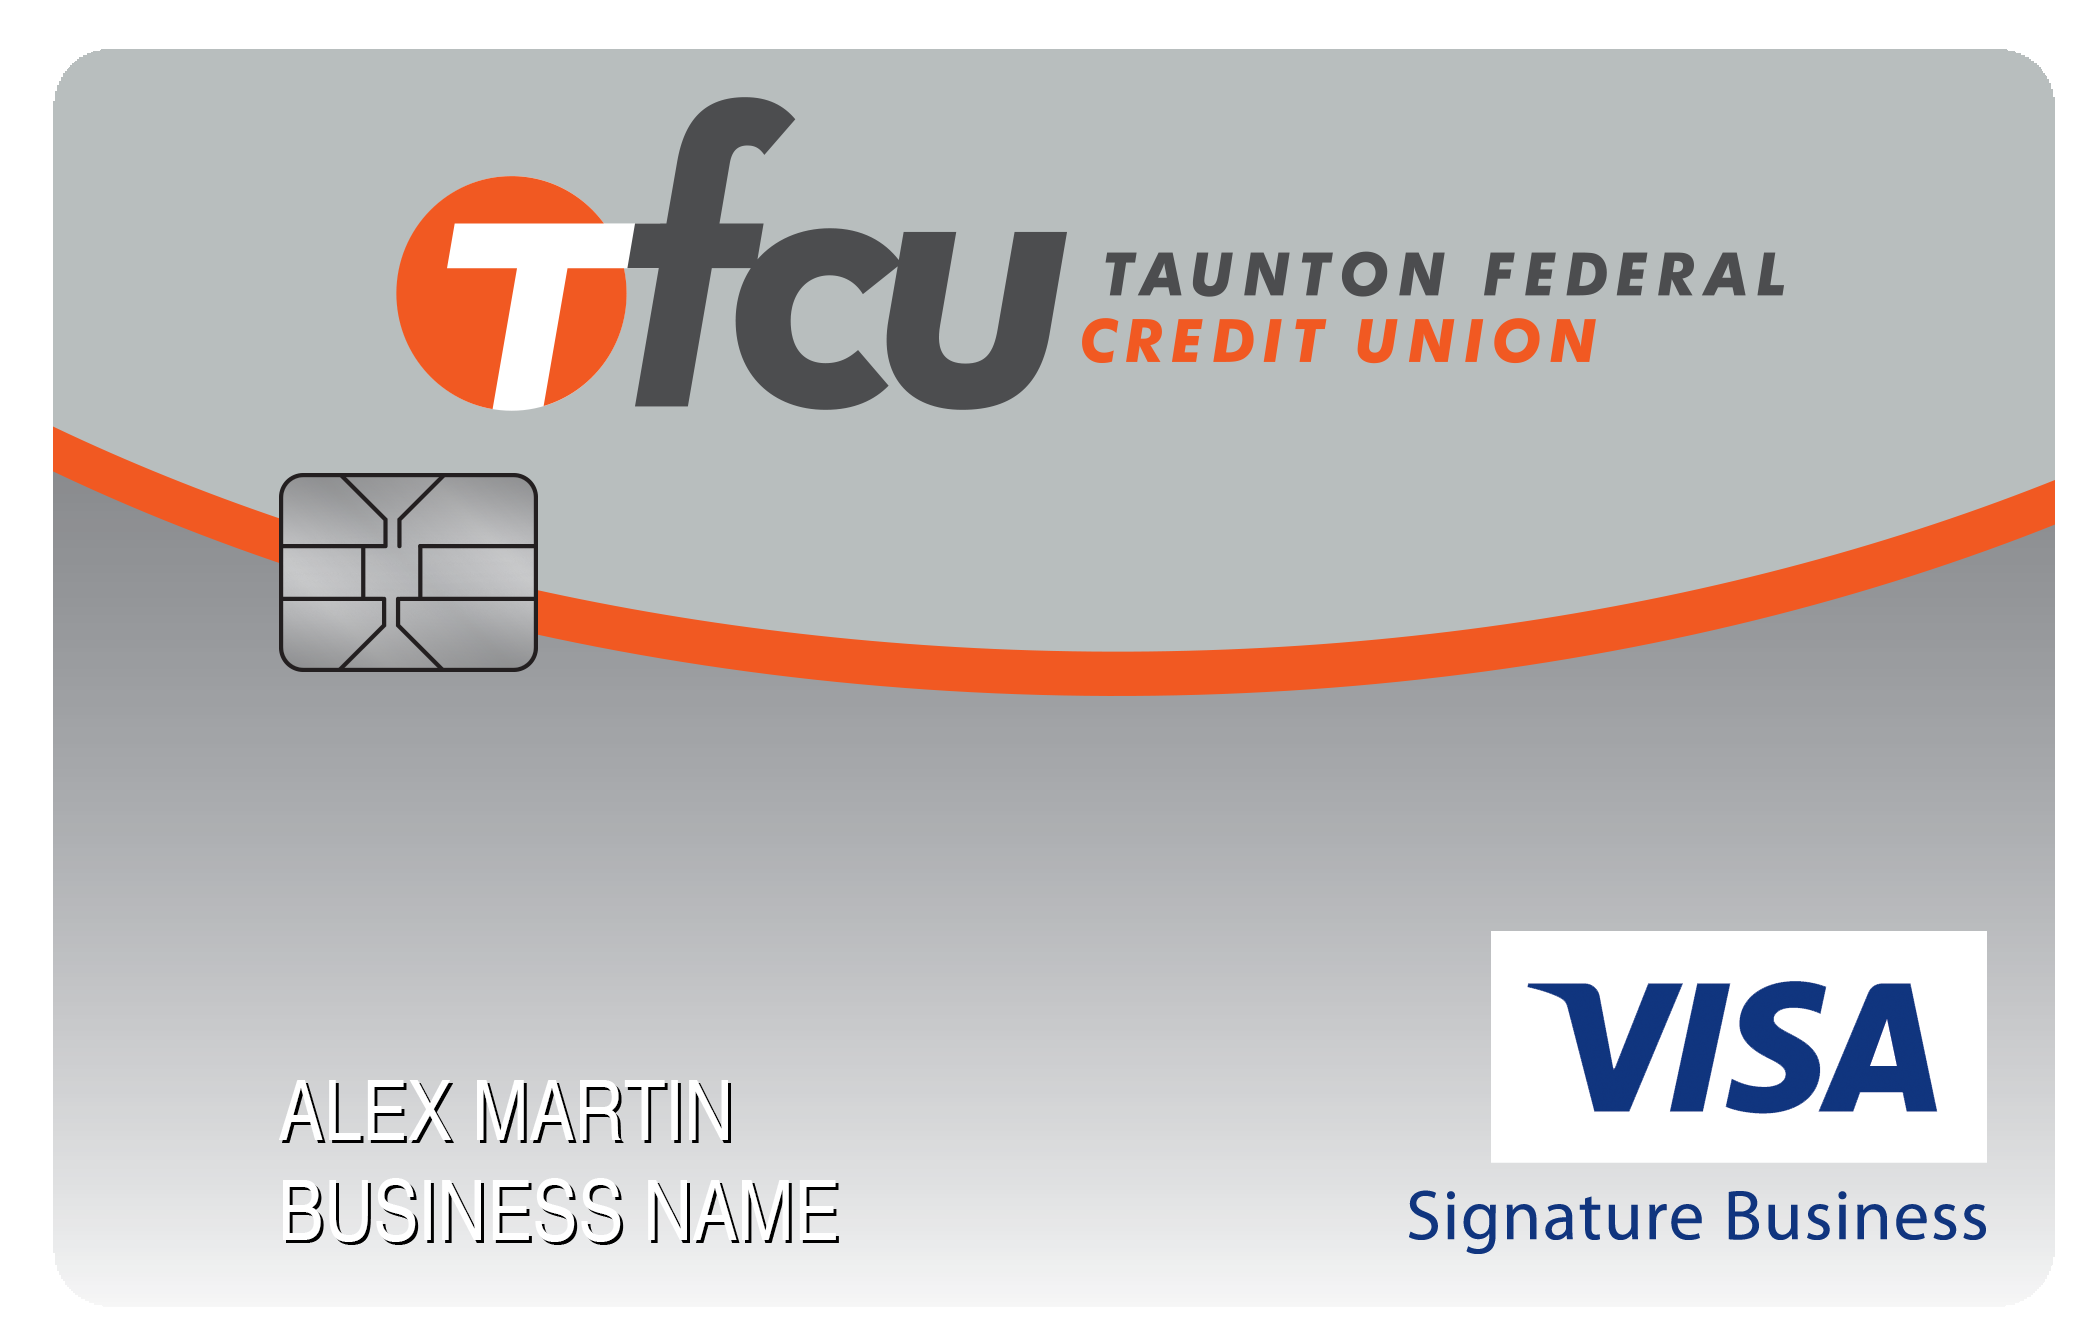 Taunton Federal Credit Union Smart Business Rewards Card